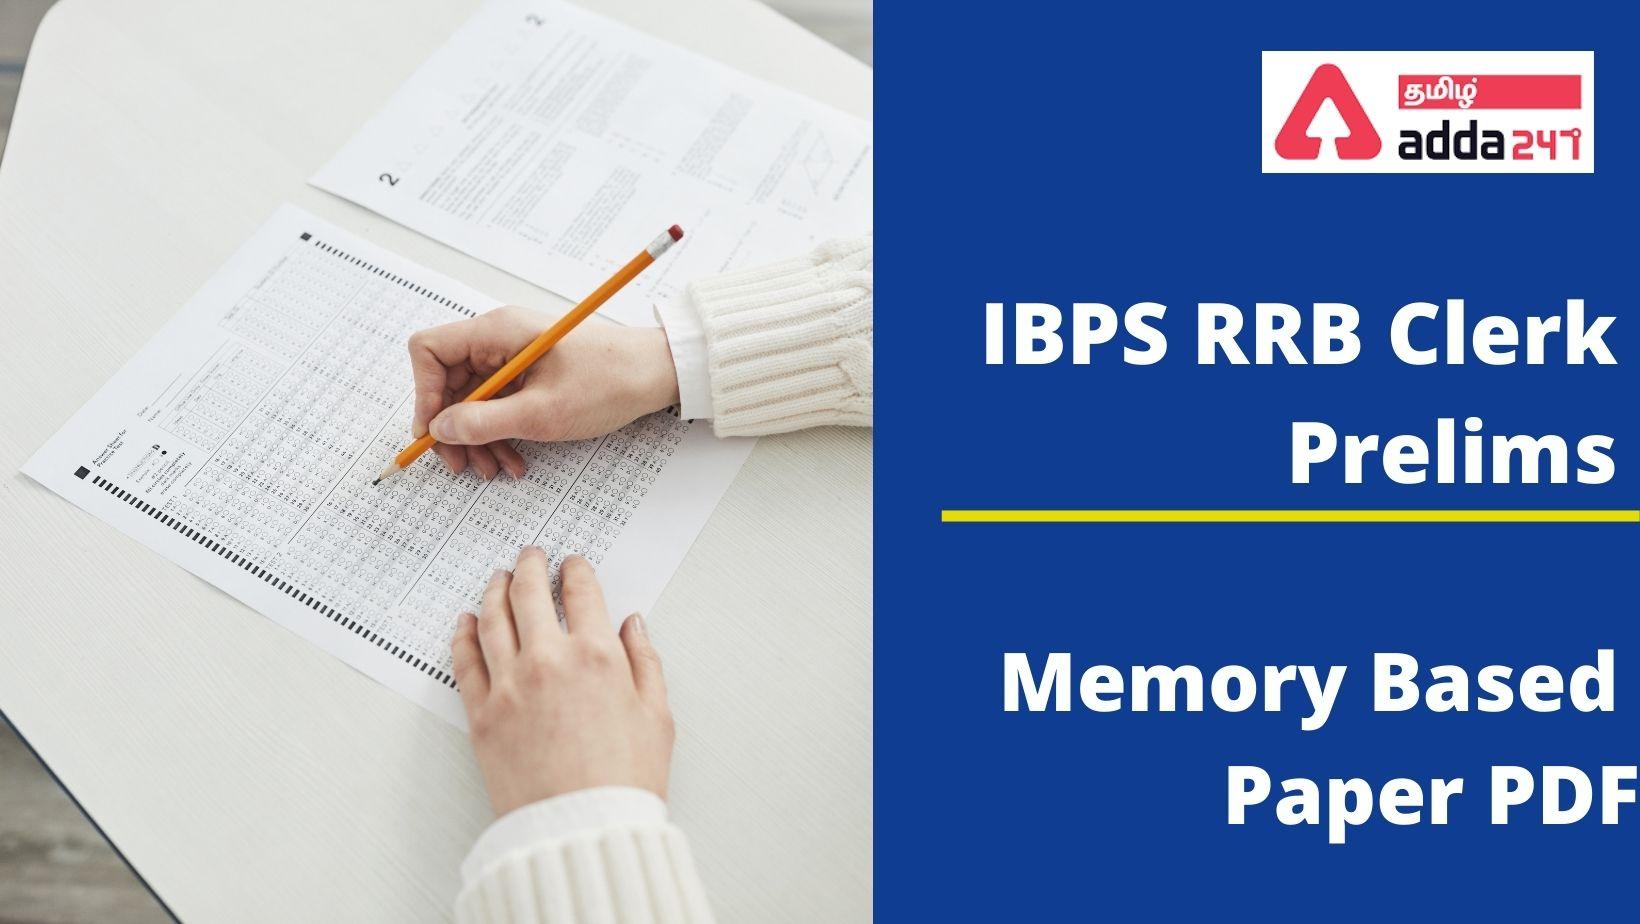 IBPS RRB Clerk Prelims Memory Based Paper PDF